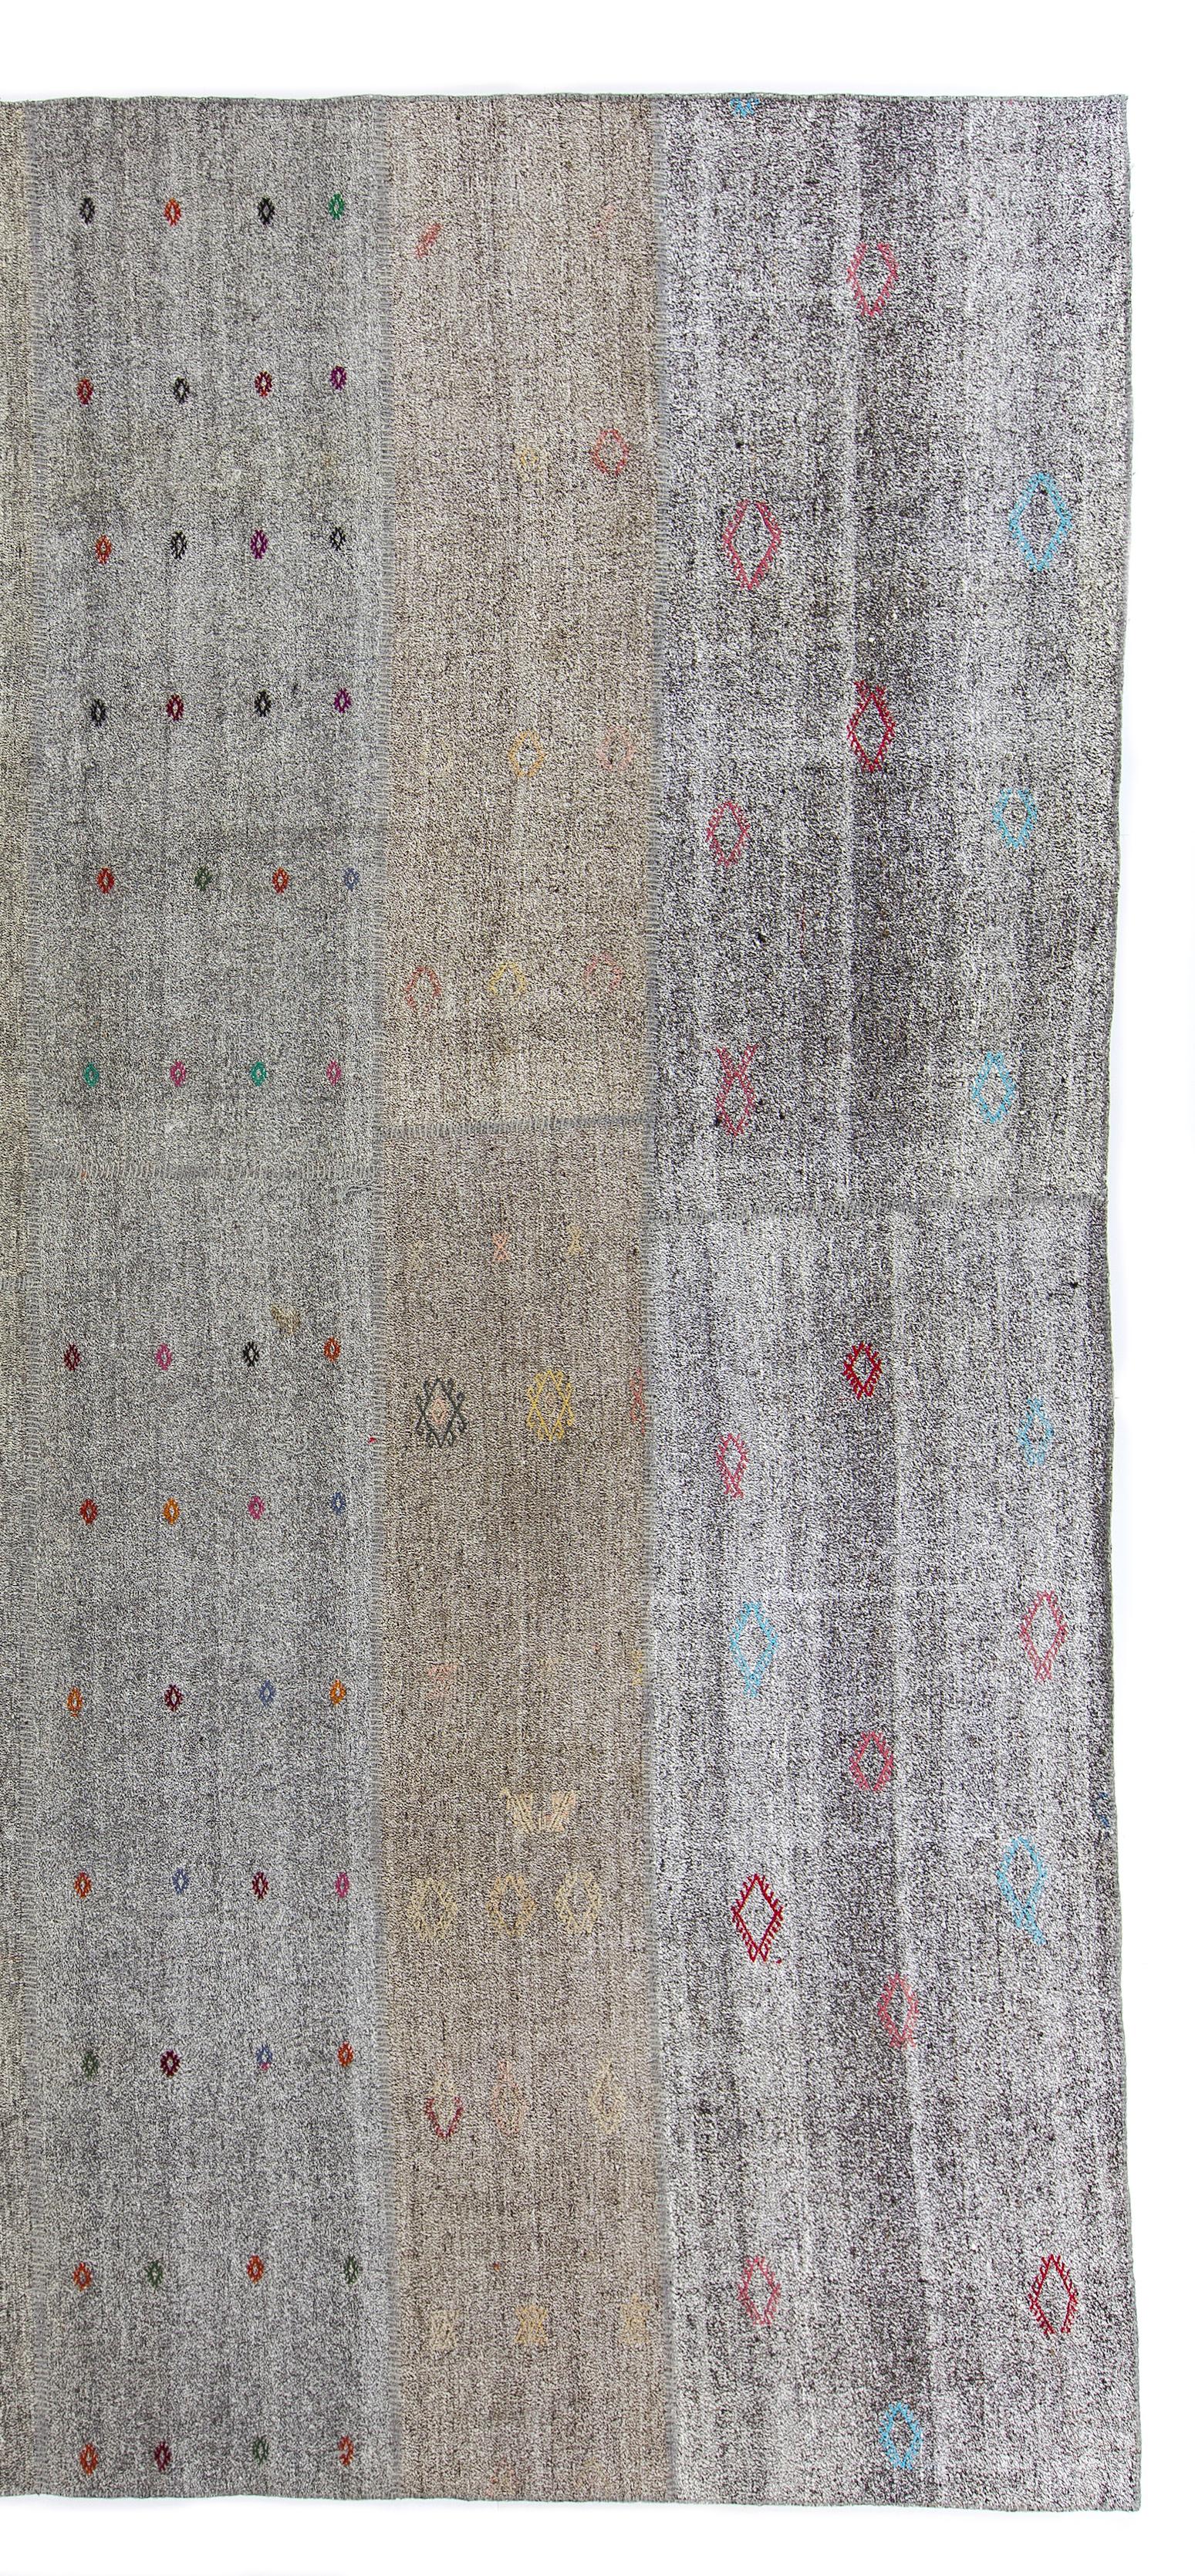 Goat Hair Hand-Woven Vintage Anatolian Kilim Rug, Flat-Weave Floor Covering